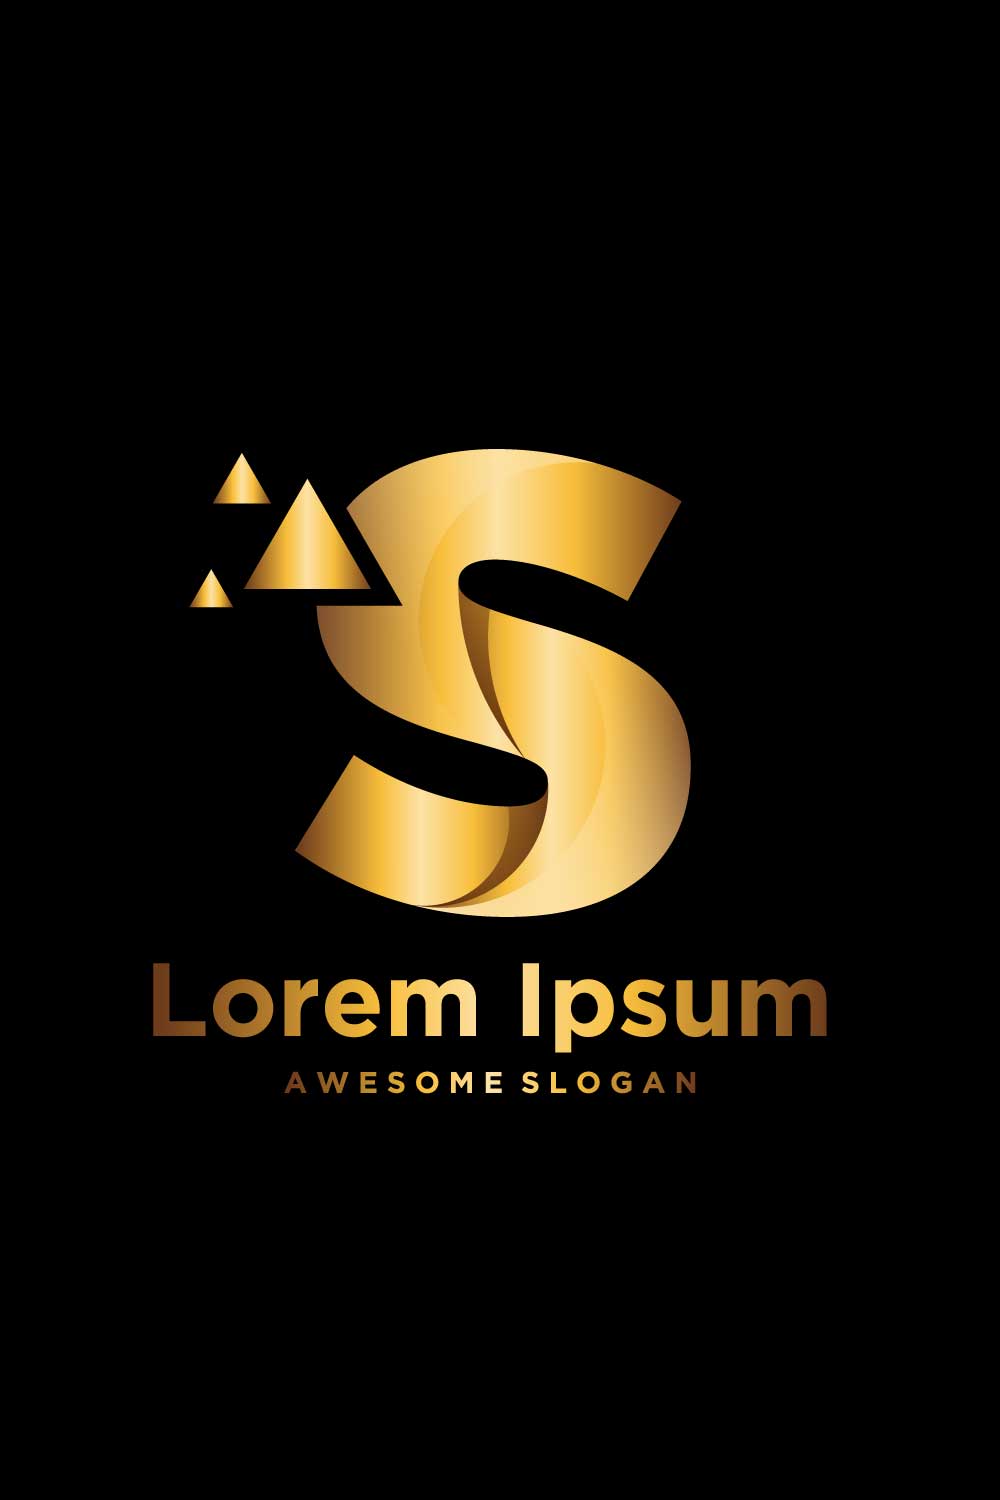 Company letter S logo luxury gradient design pinterest preview image.